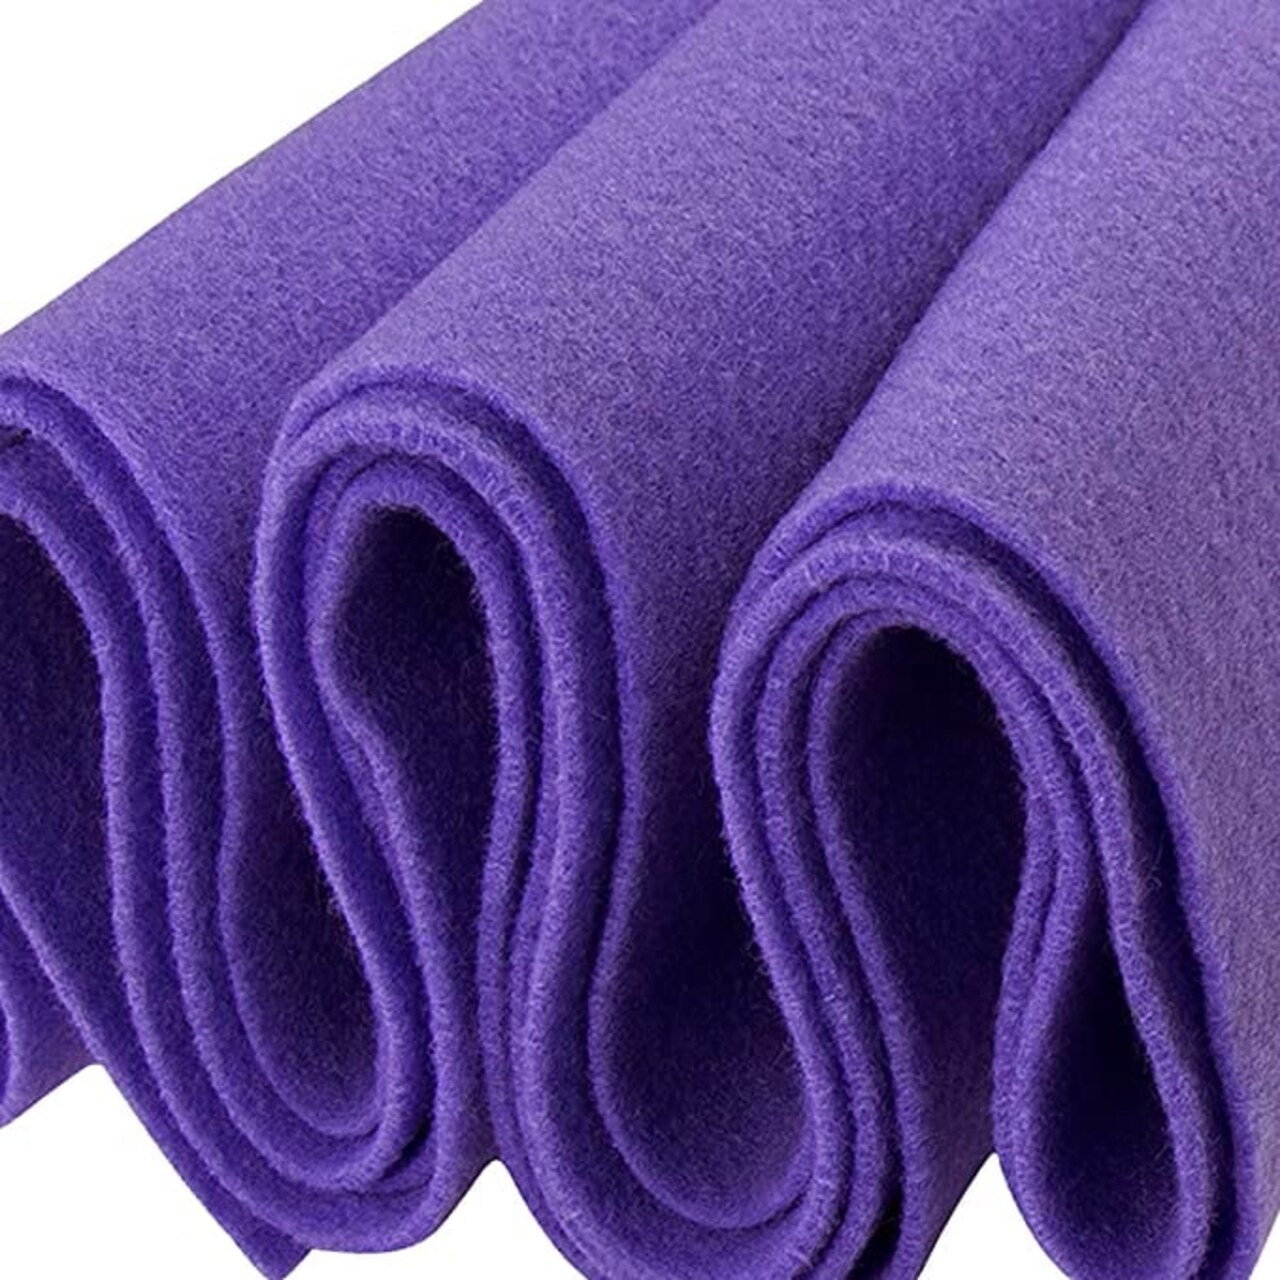 FabricLA Craft Felt Fabric - 36 X 36 Inch Wide & 1.6mm Thick Felt Fabric  - Use This Soft Felt for Crafts - Felt Material Pack - Lavender A039